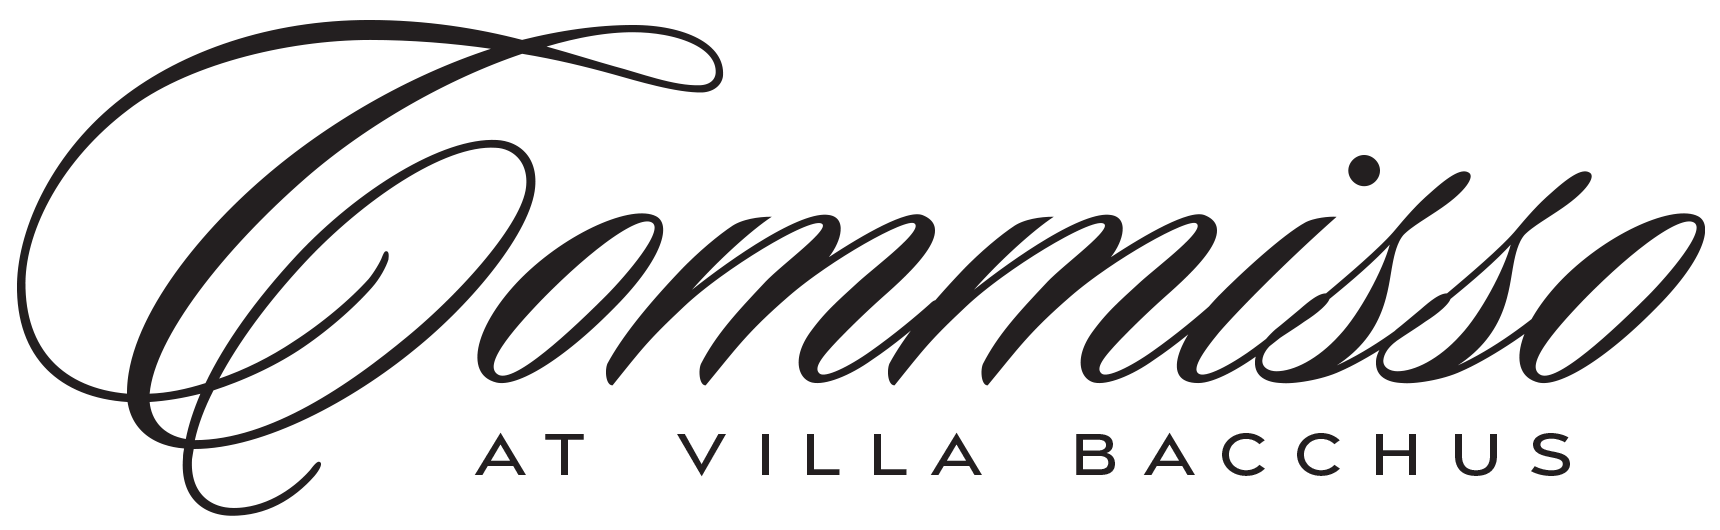 Villa Bacchus Winery